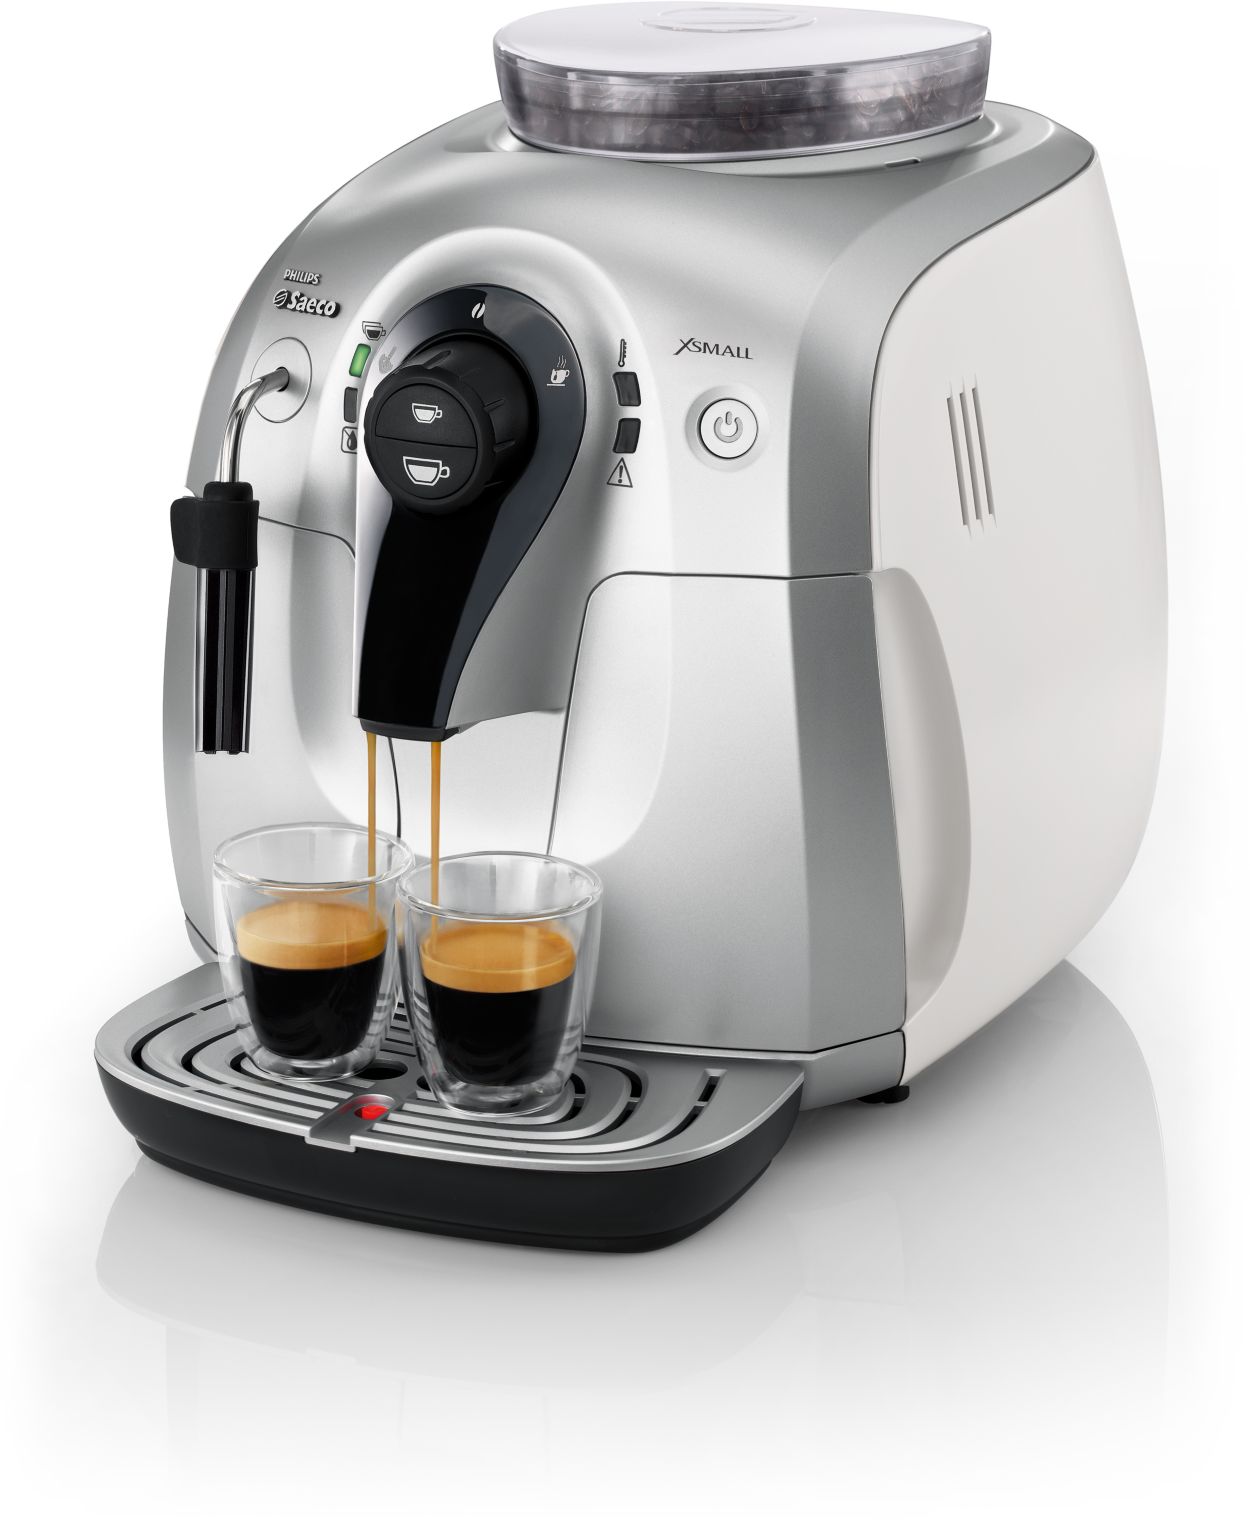 Xsmall Máquina de café expresso super automática HD8745/01